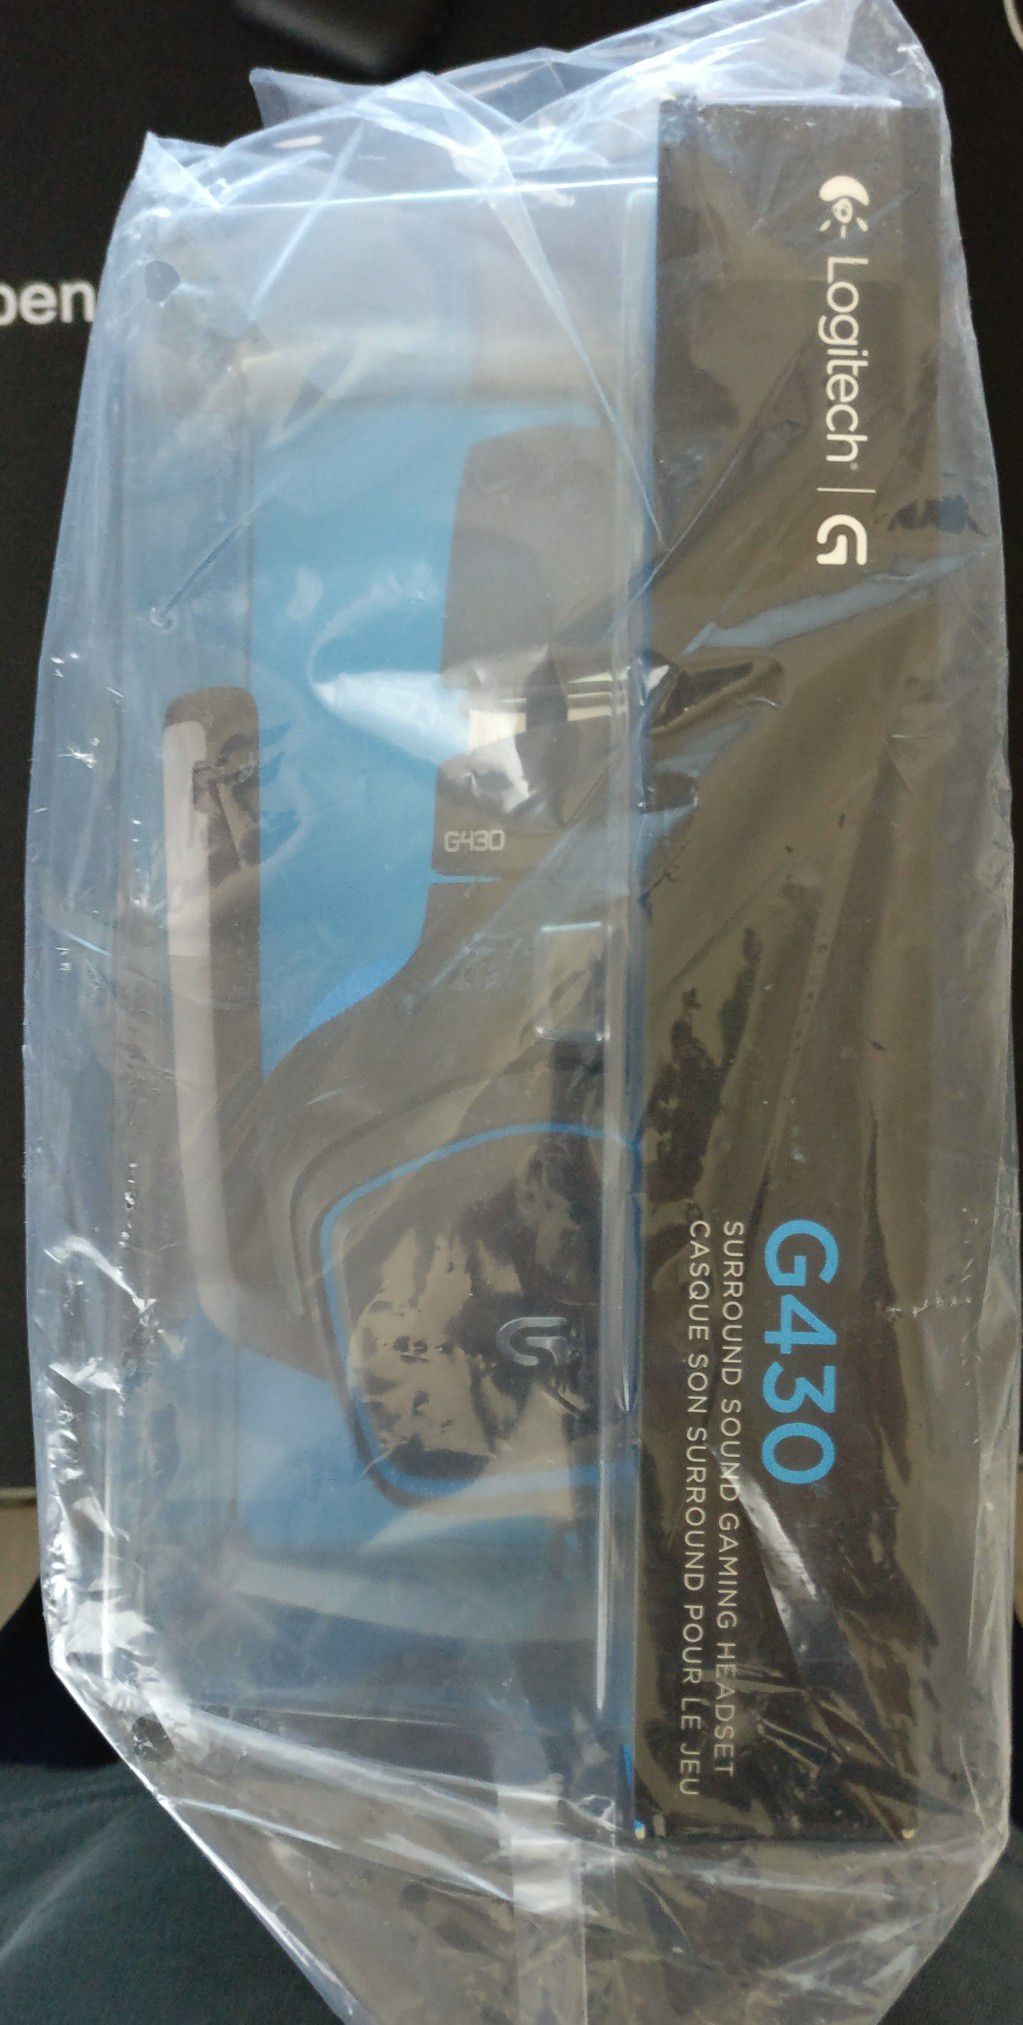 Logitech G430 Gaming Headset. New. Never opened